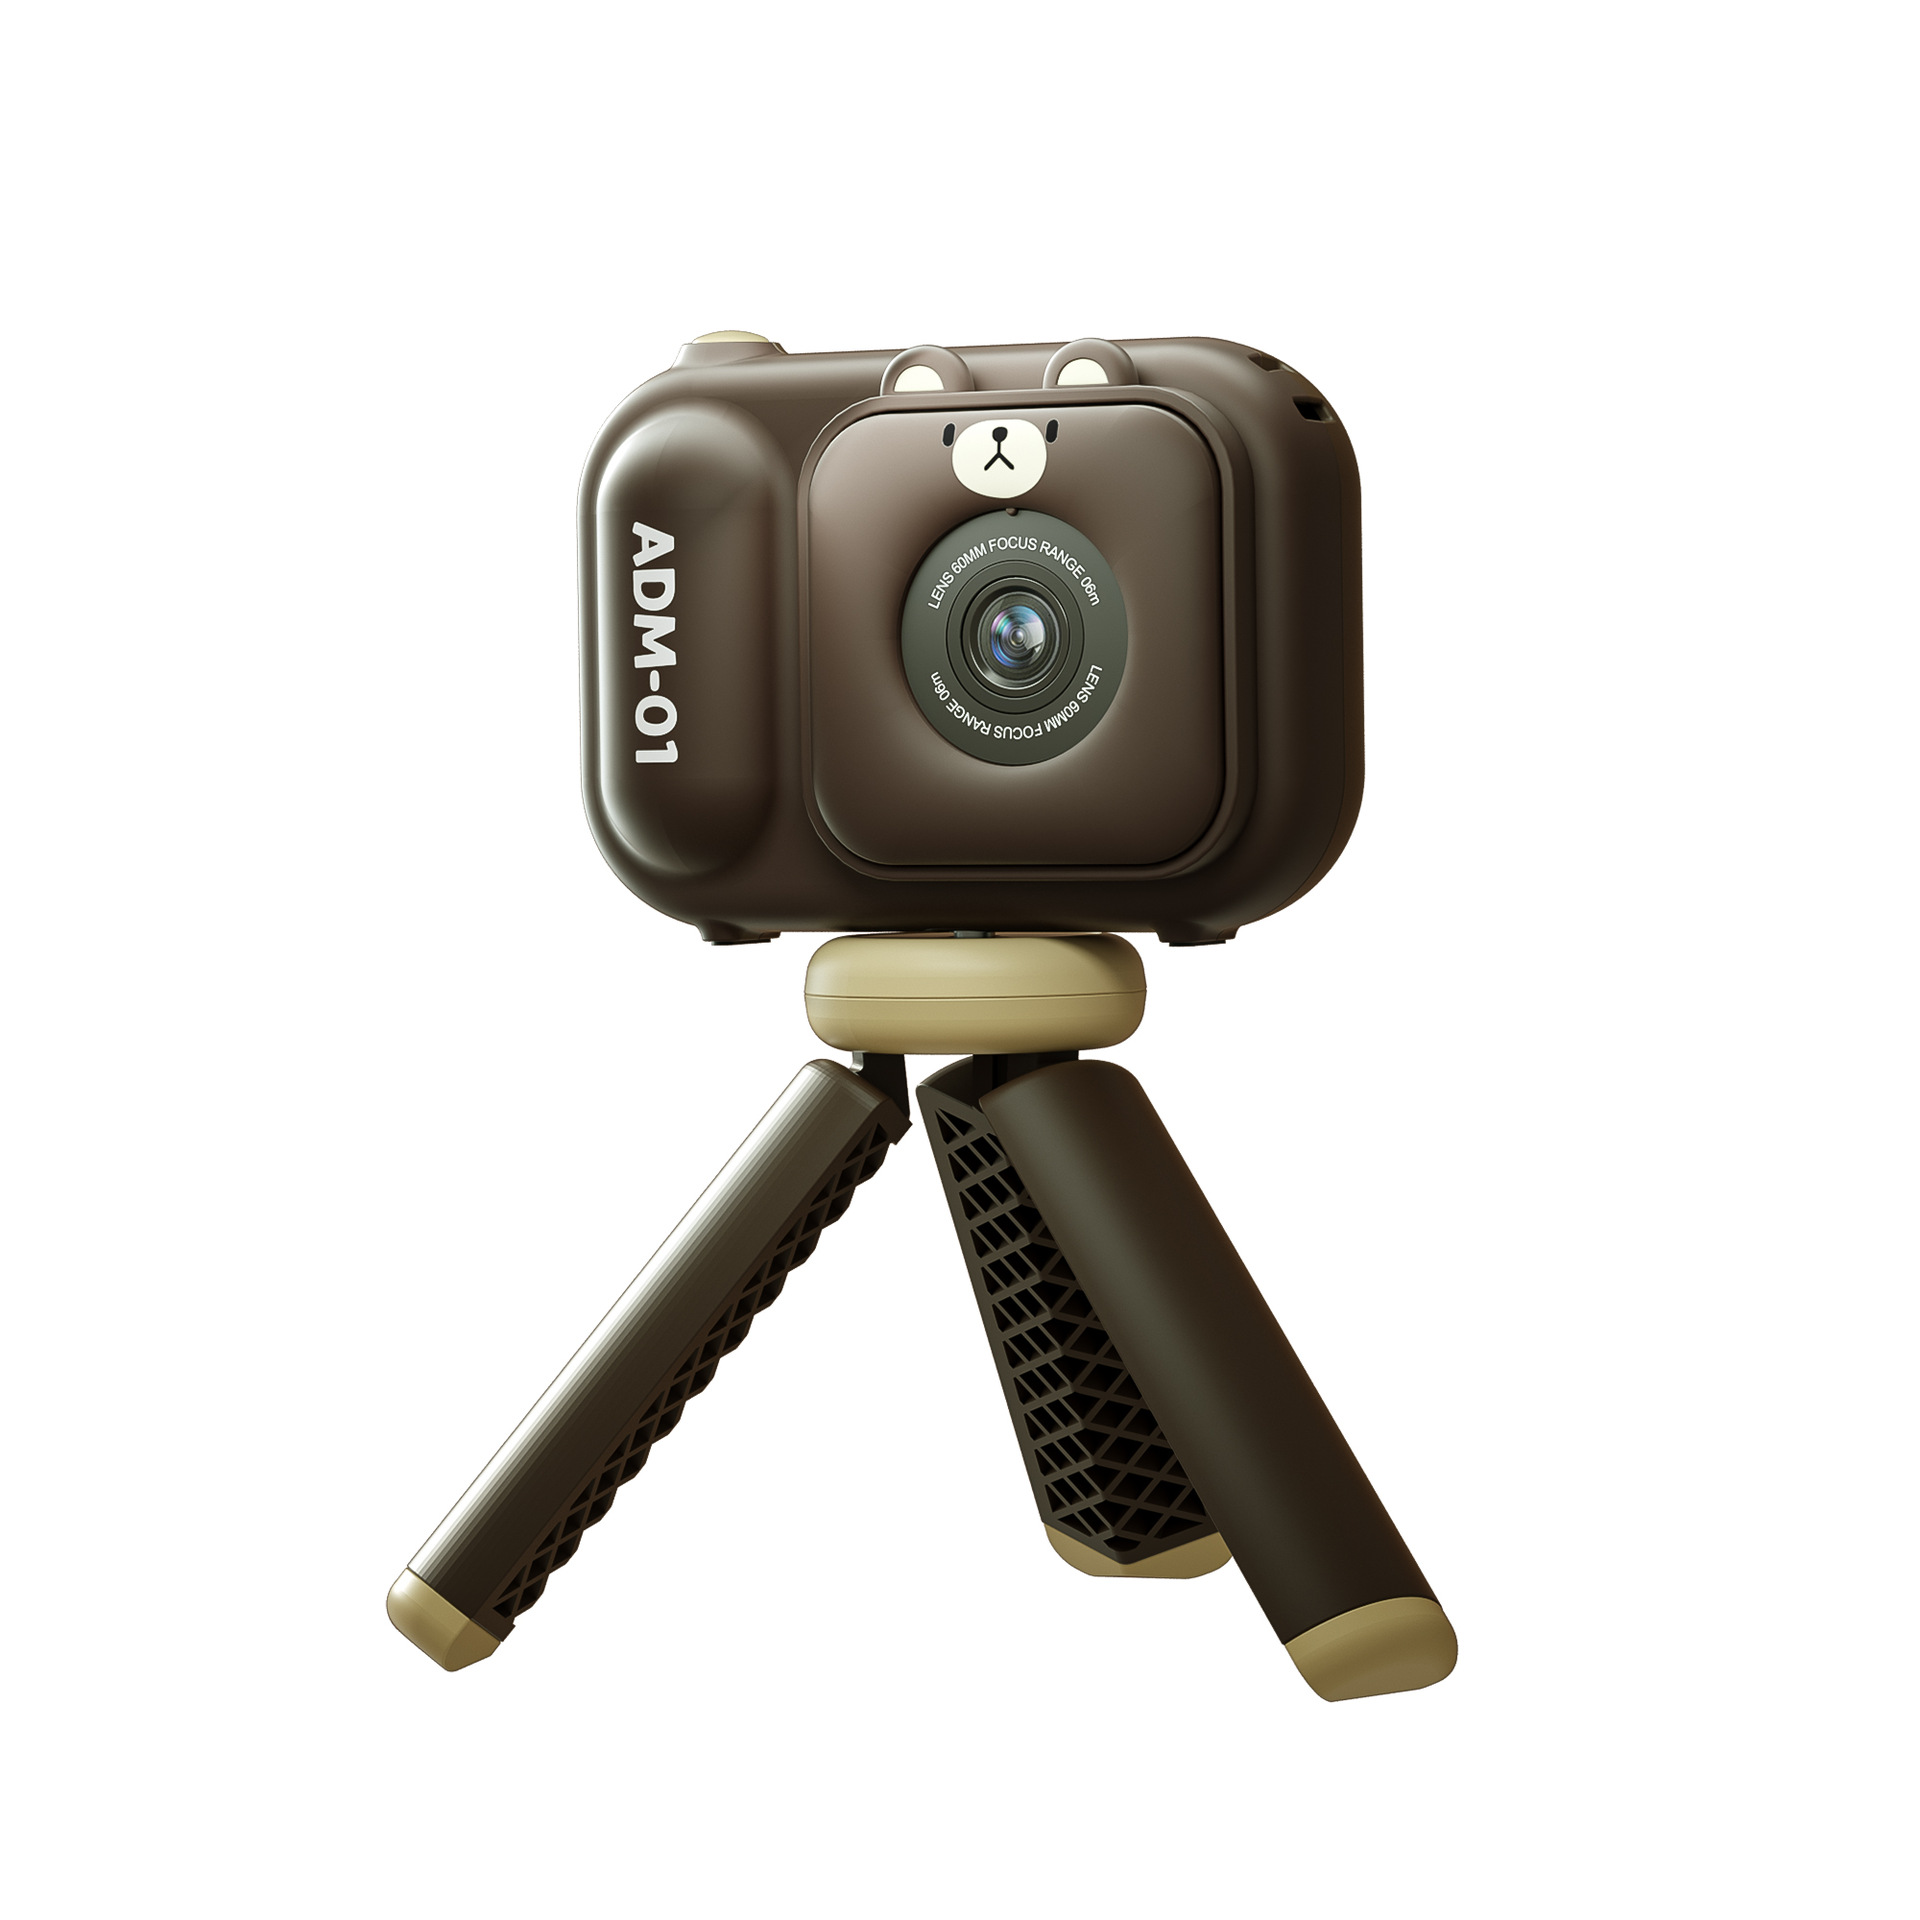 Braun Kleine SYNTEK Kamera HD Digitalkamera braun Kamera SLR mit Kinderkamera Ständer Digitalkamera Mini Mikro